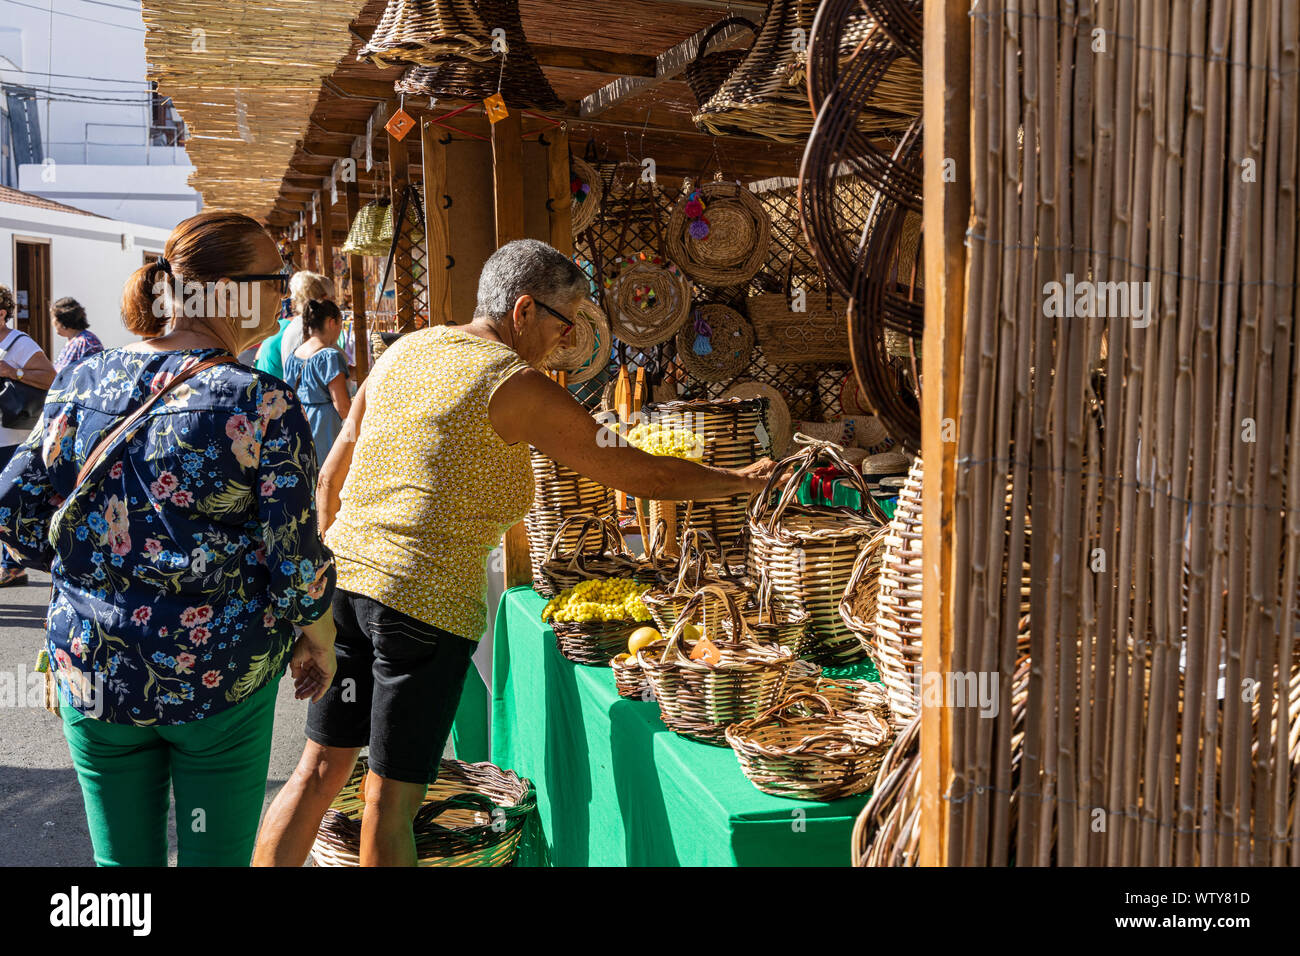 Si spegne e i visitatori a un artigiano in fiera a Guia de Isora, Tenerife, Isole Canarie, Spagna Foto Stock